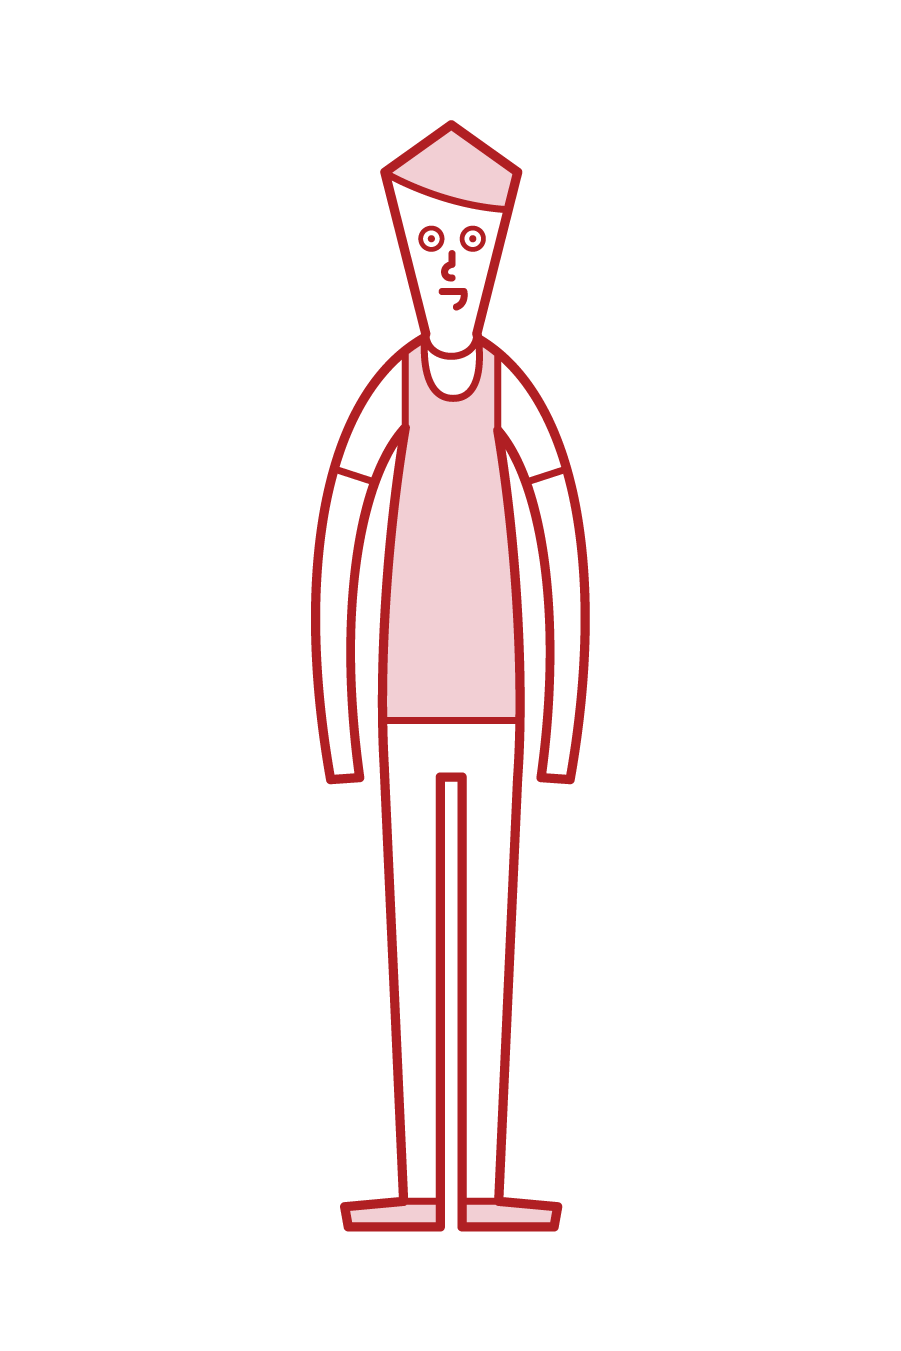 Illustration of a man wearing bibs